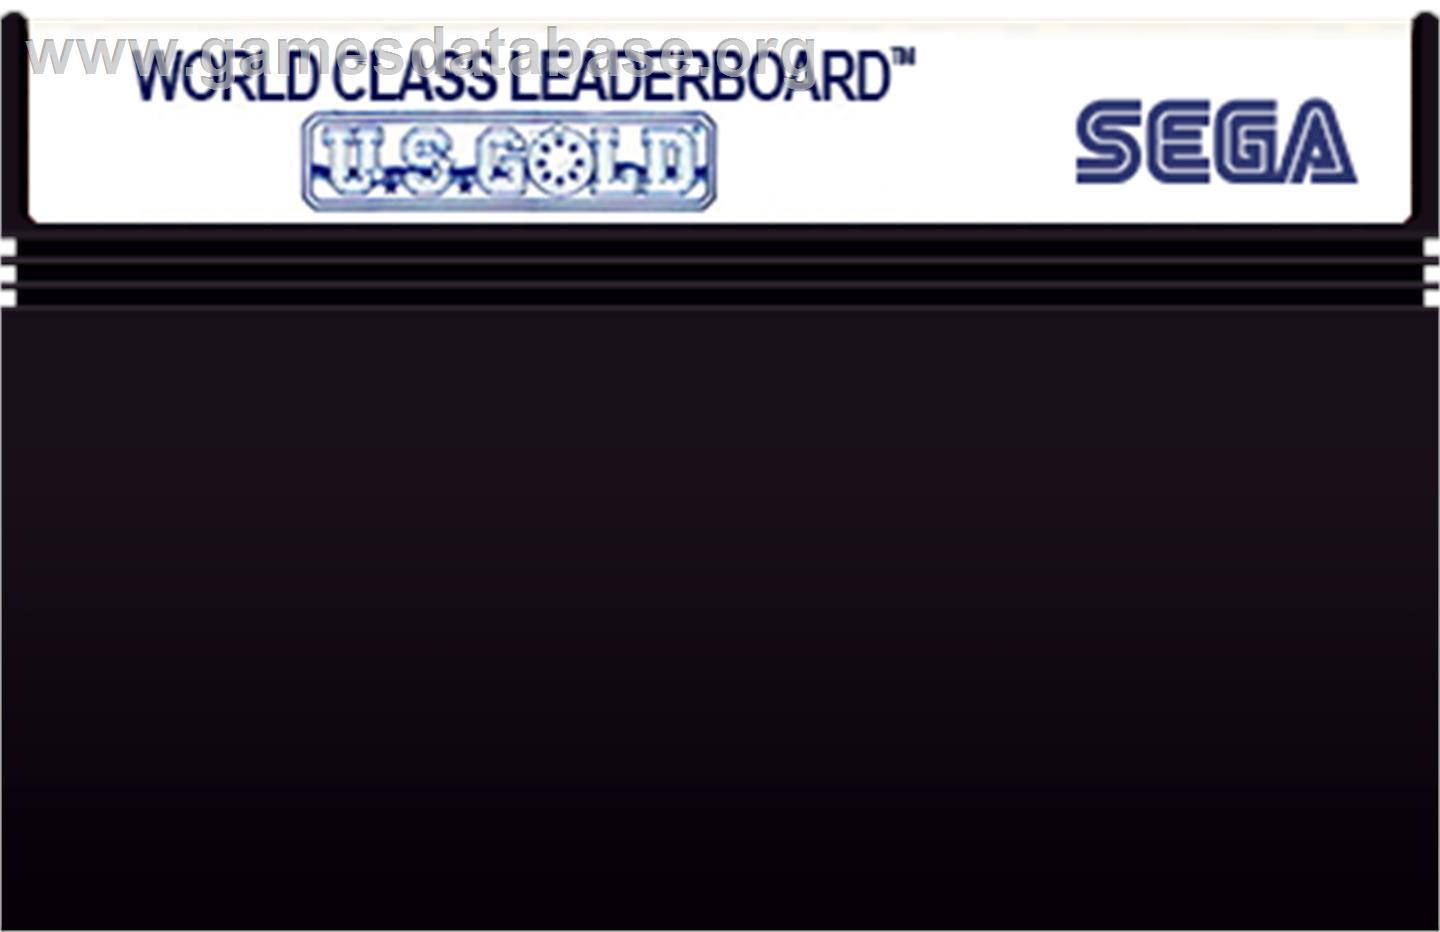 World Class Leaderboard - Sega Master System - Artwork - Cartridge